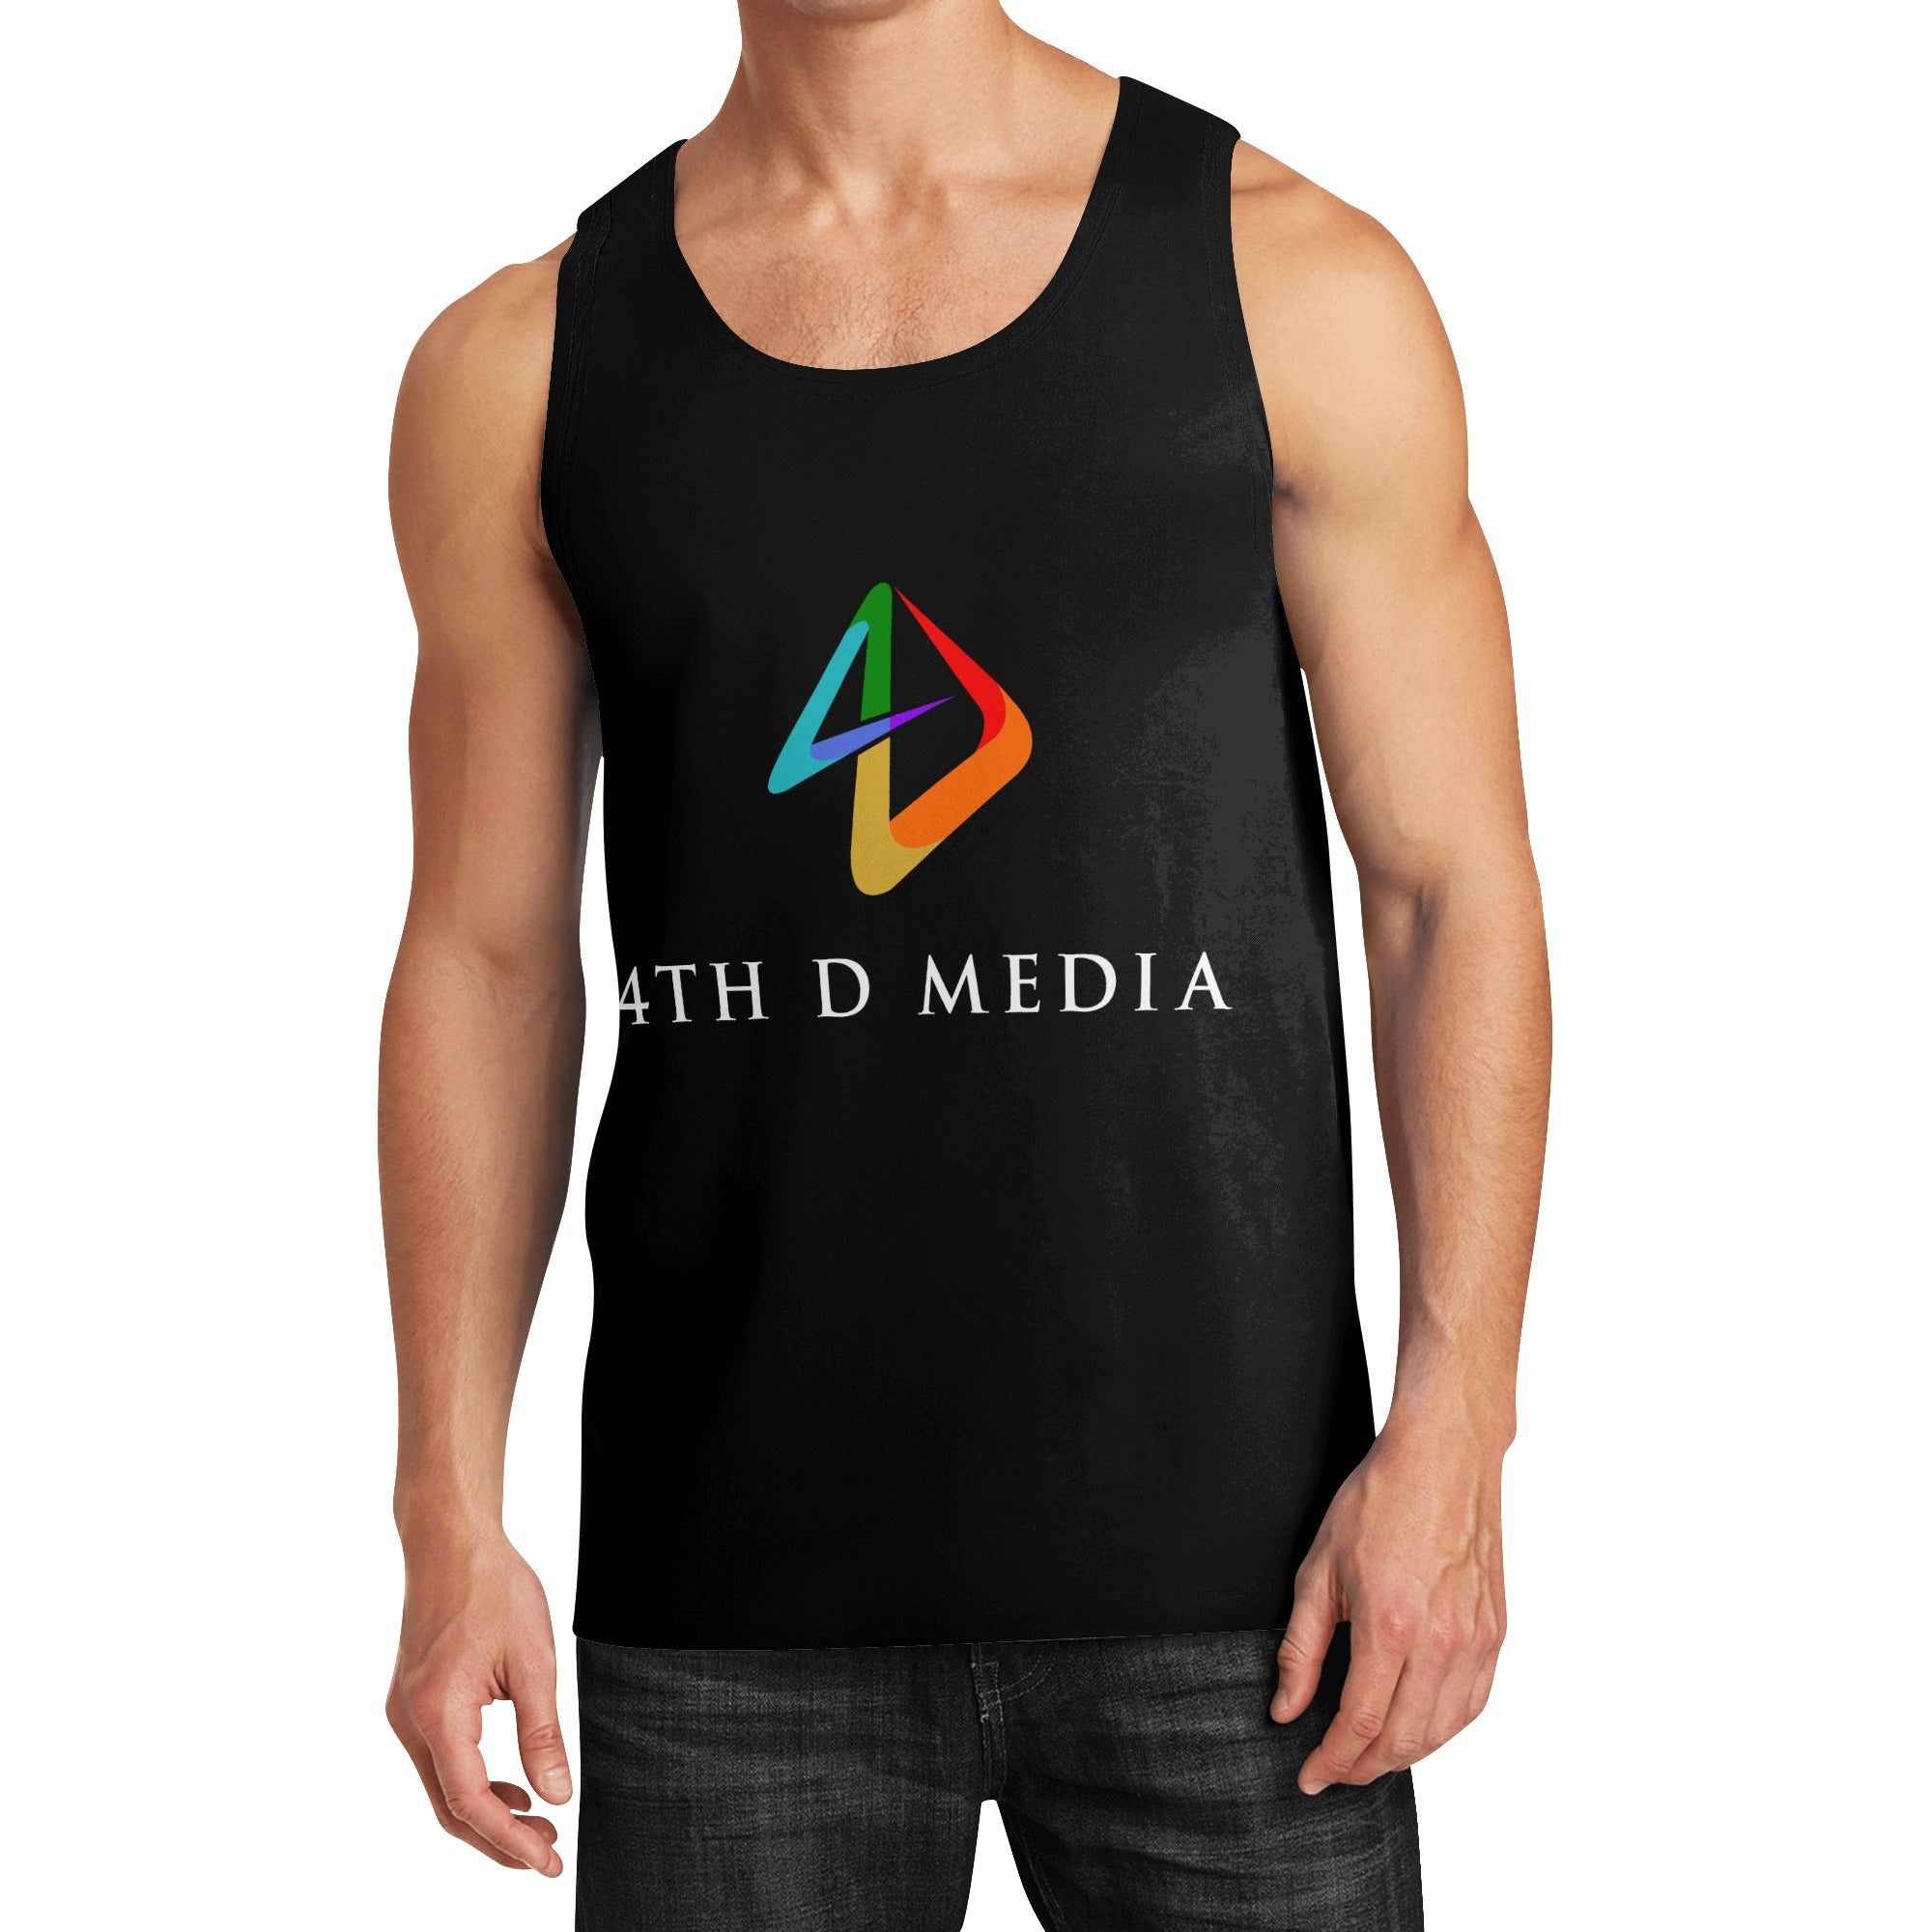 4thDMedia Mens Vest Shirt Black